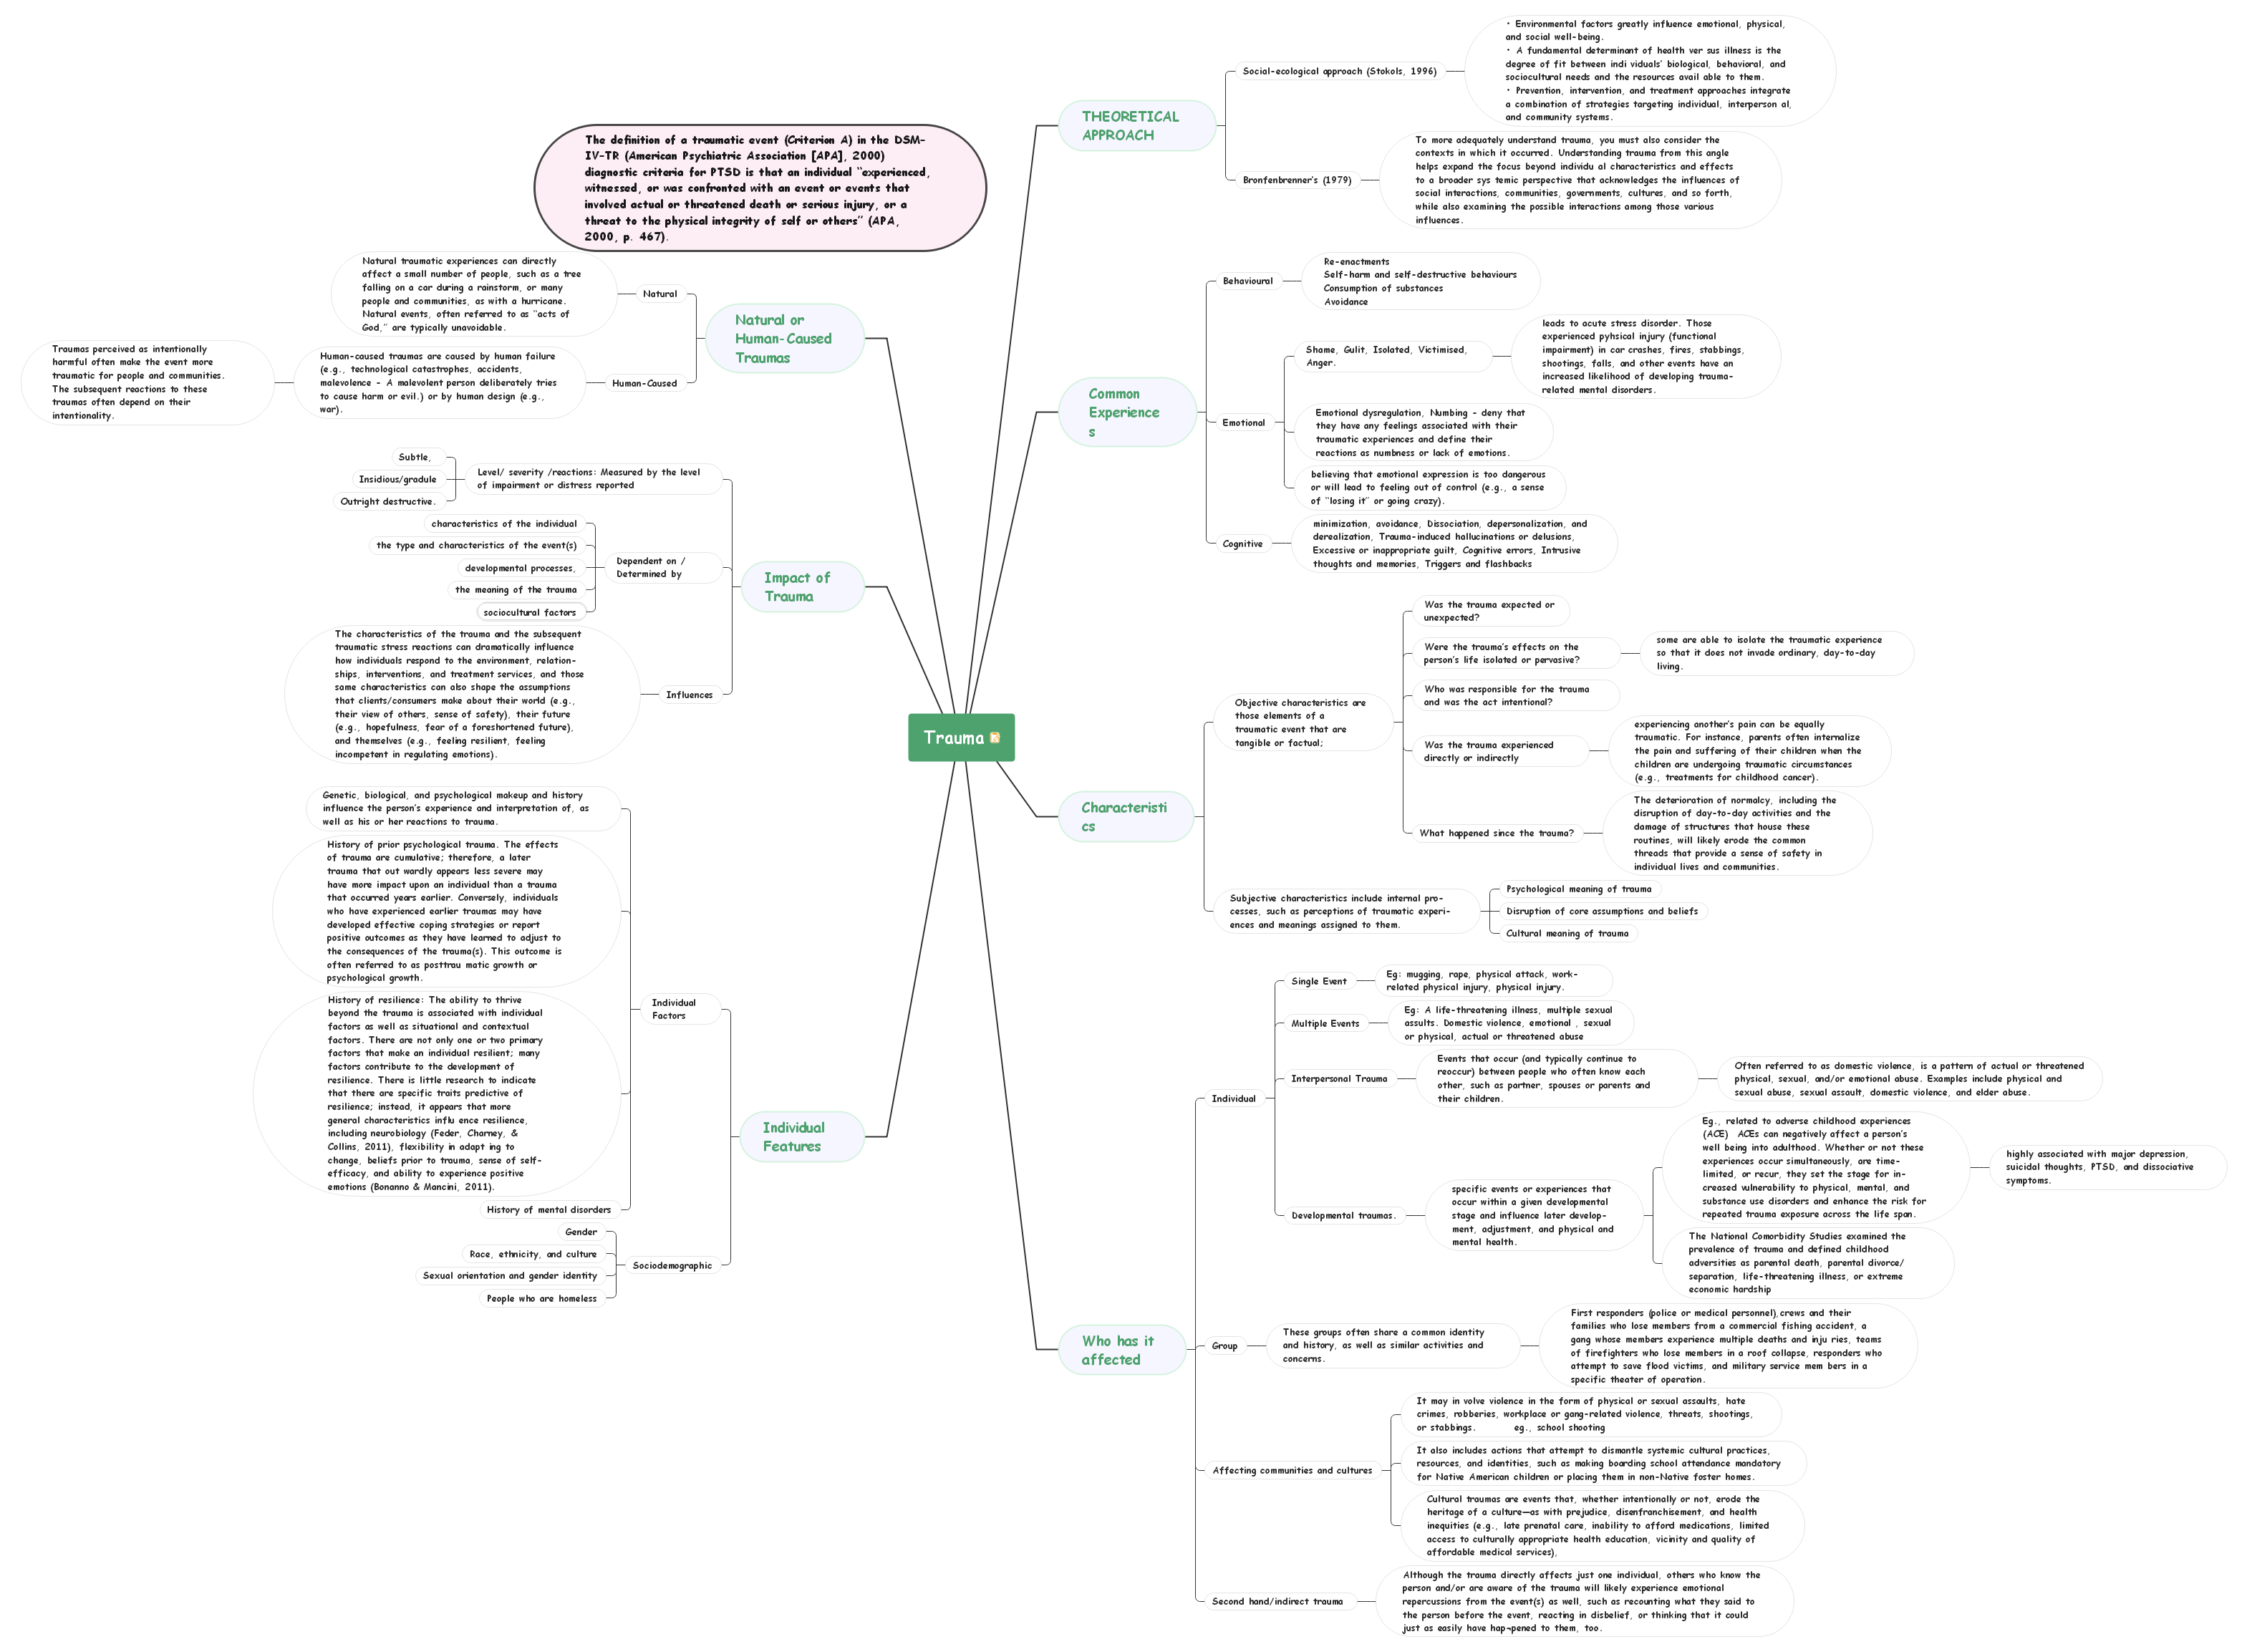 Concept Map of trauma